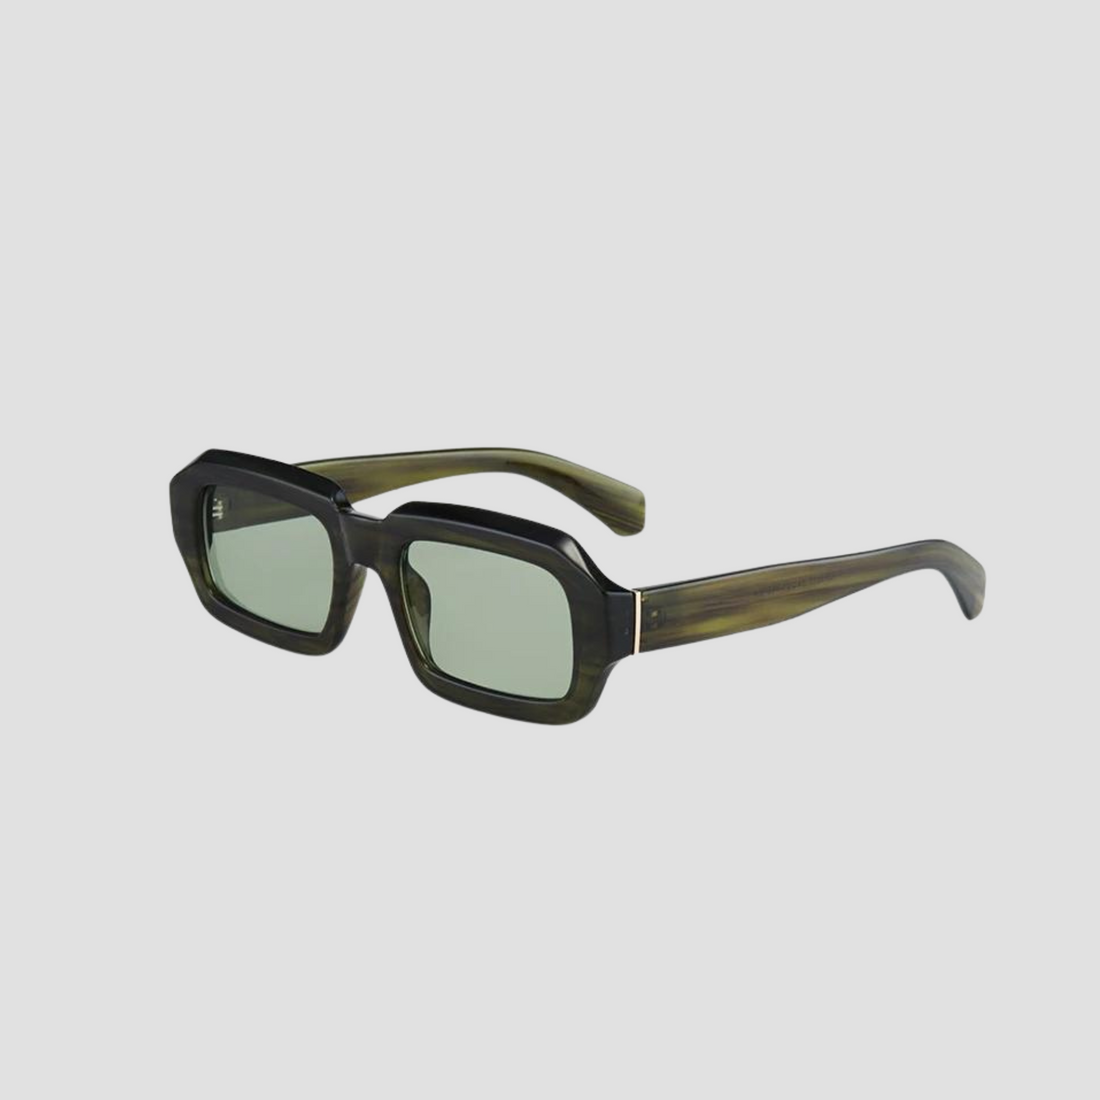 Vintage Olive Tint Rectangle Sunglasses